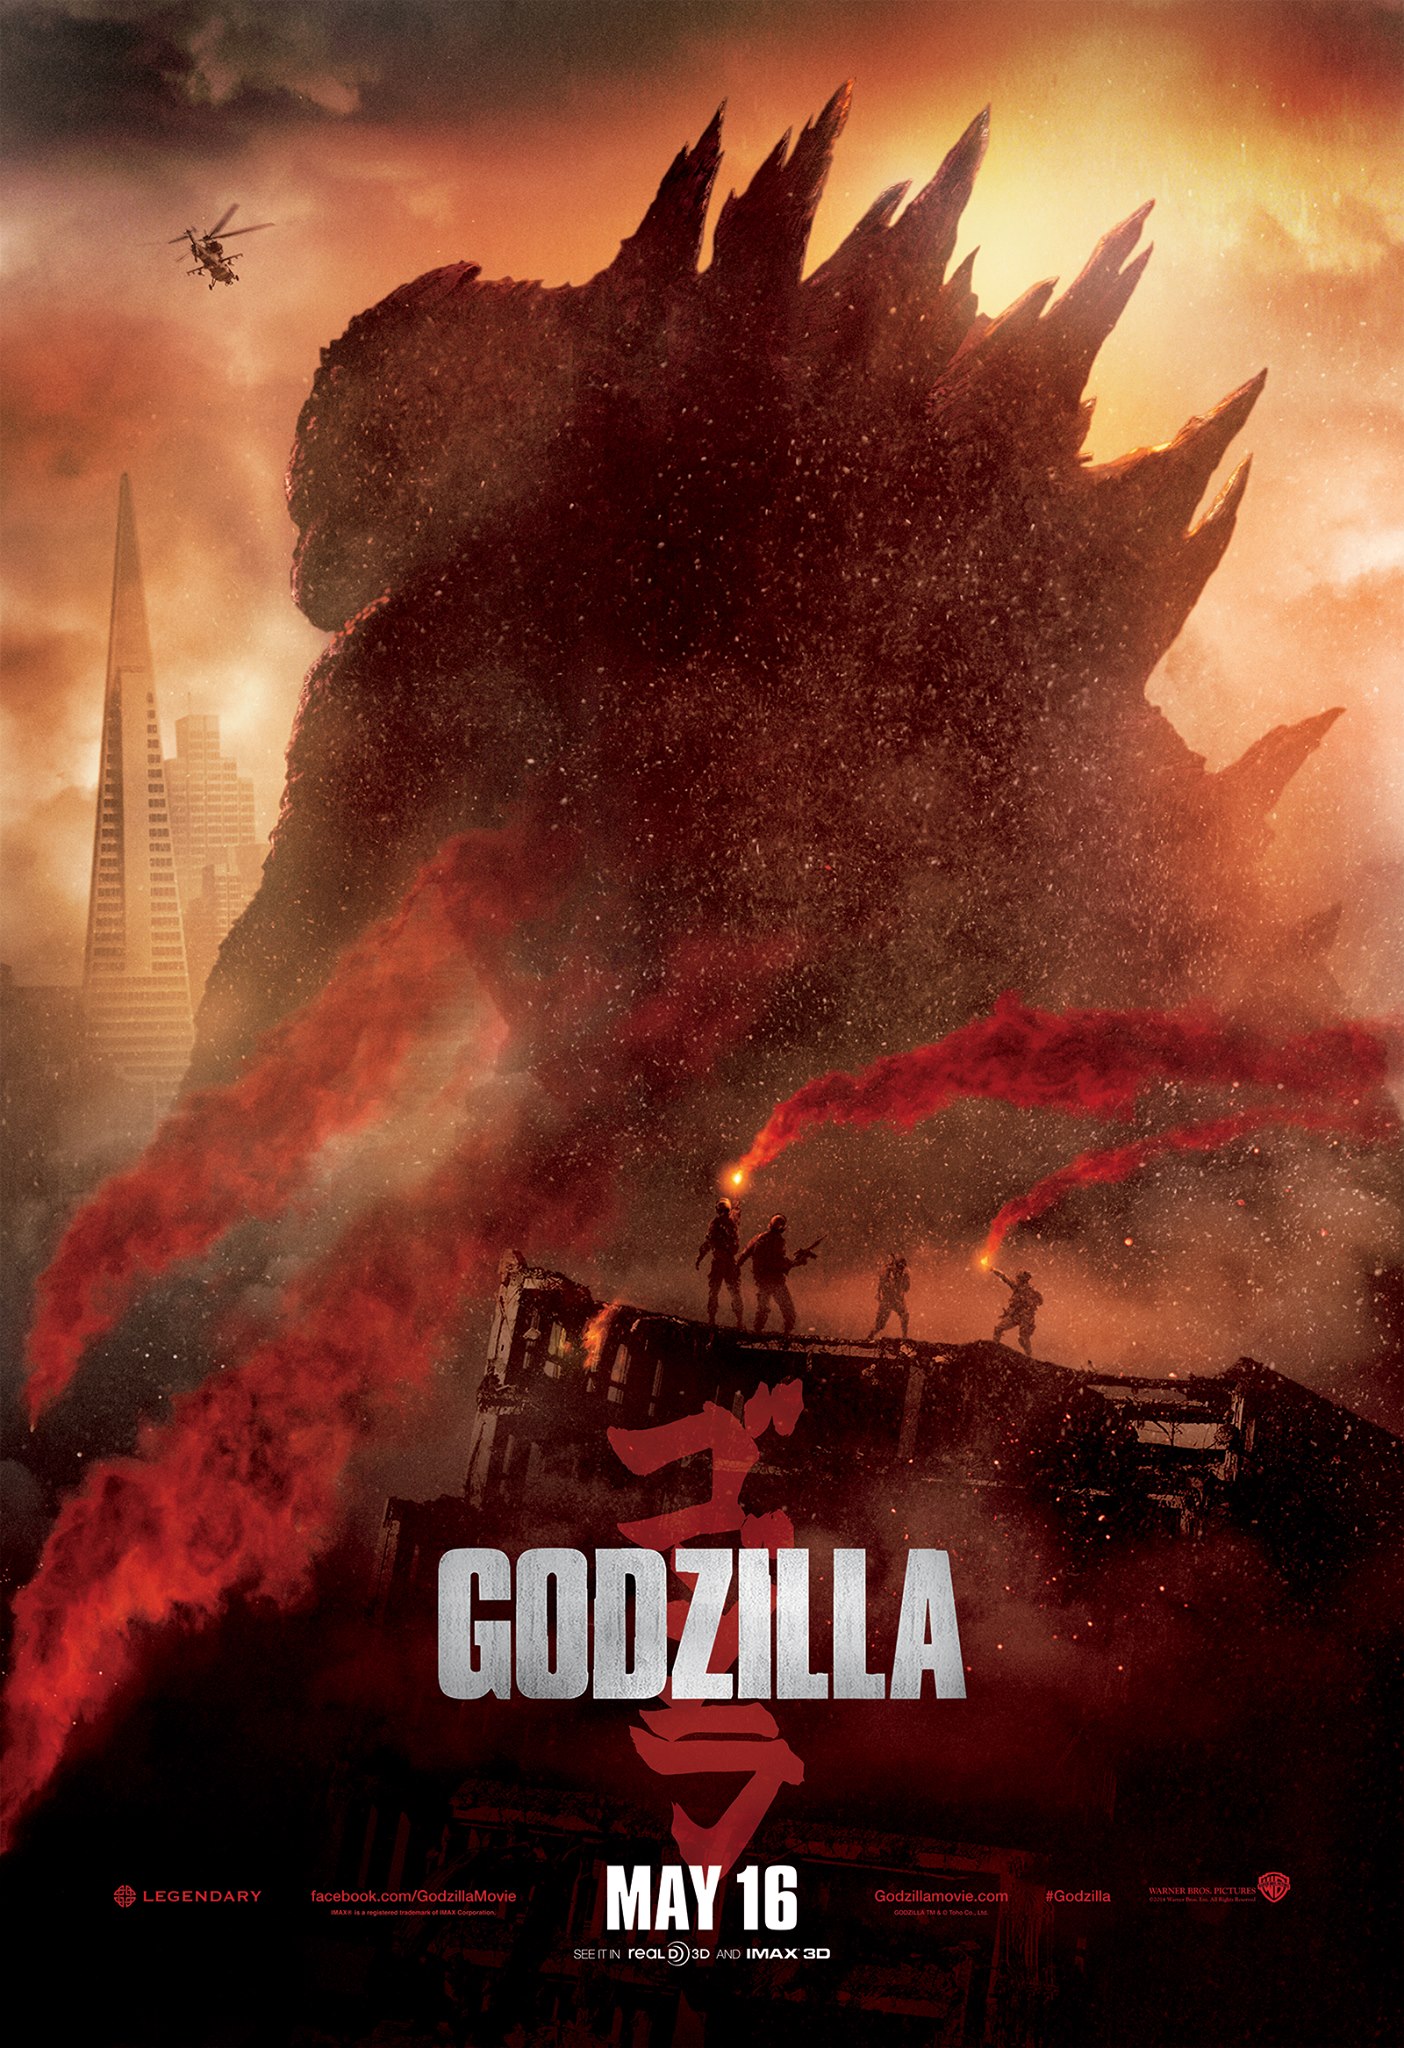 Godzilla 2014 Poster image - DylanRocket - Mod DB